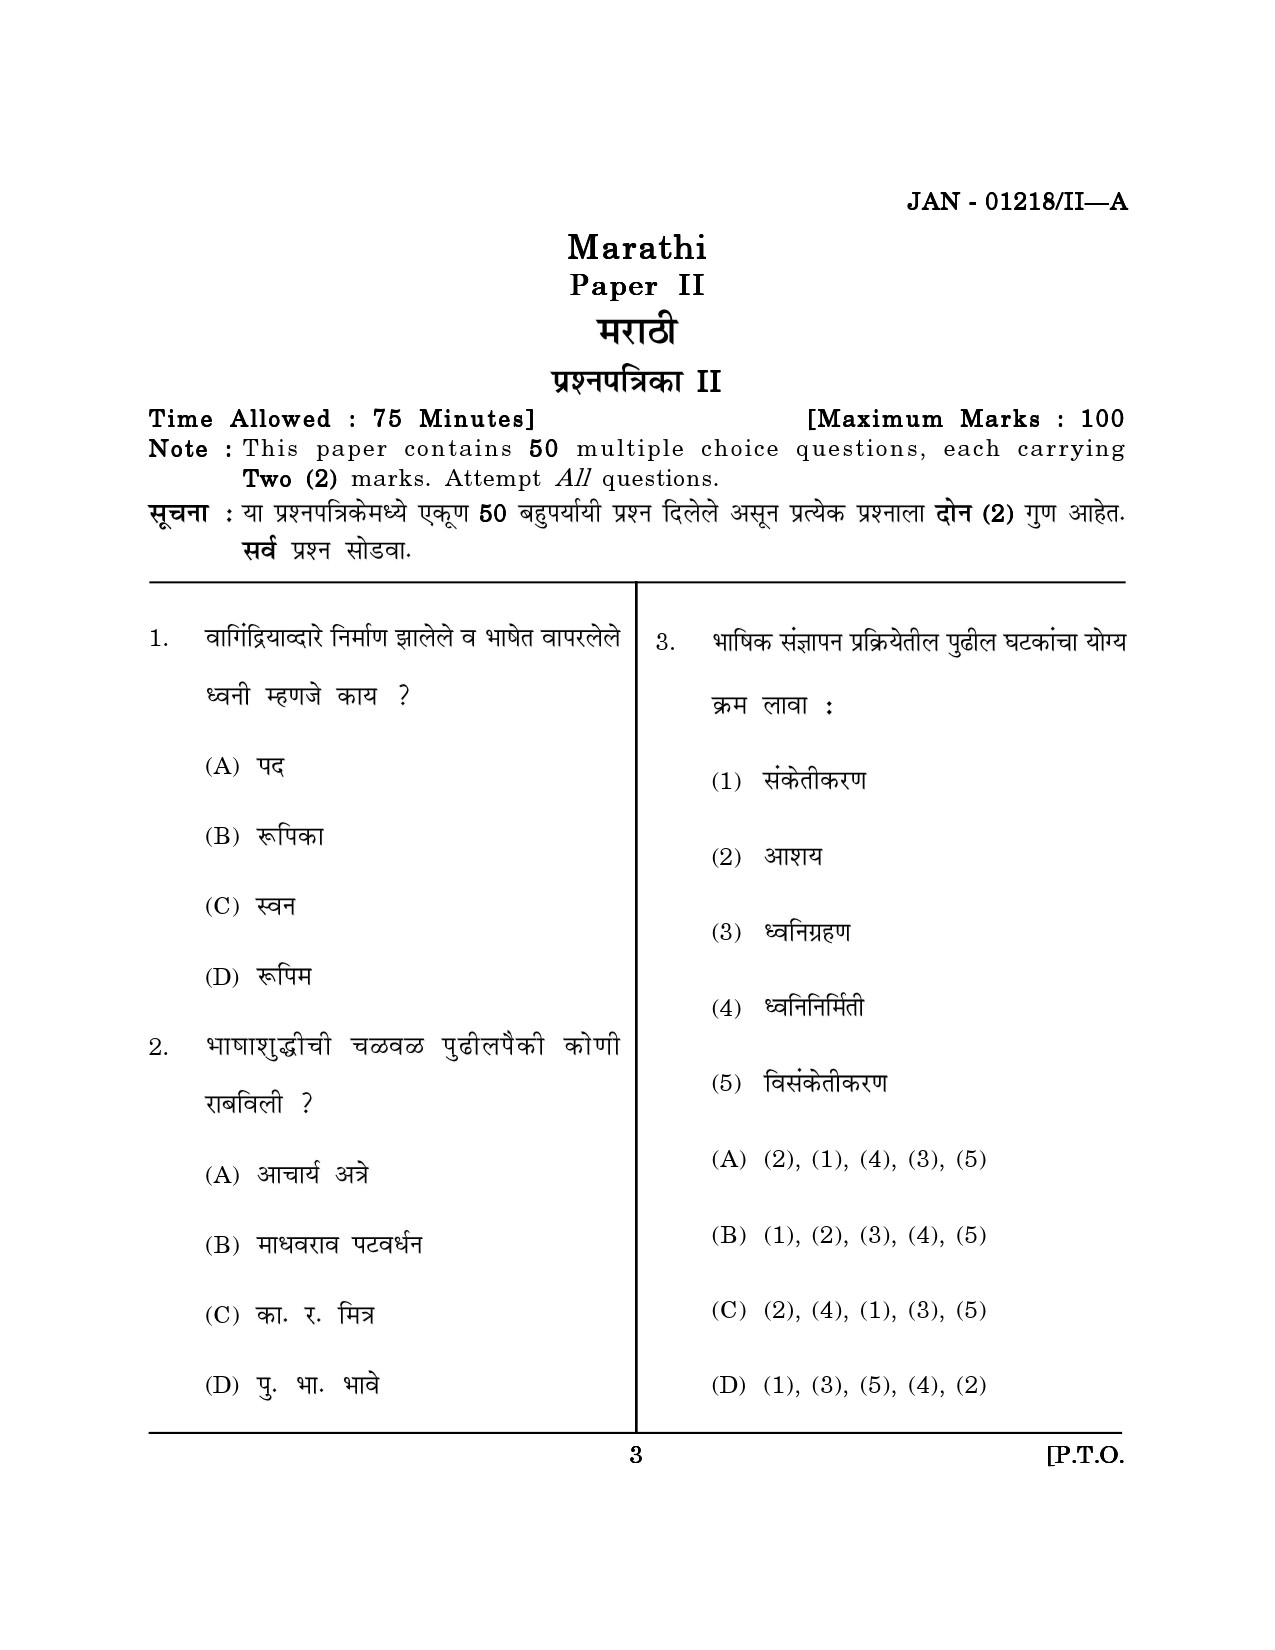 Maharashtra SET Marathi Question Paper II January 2018 2